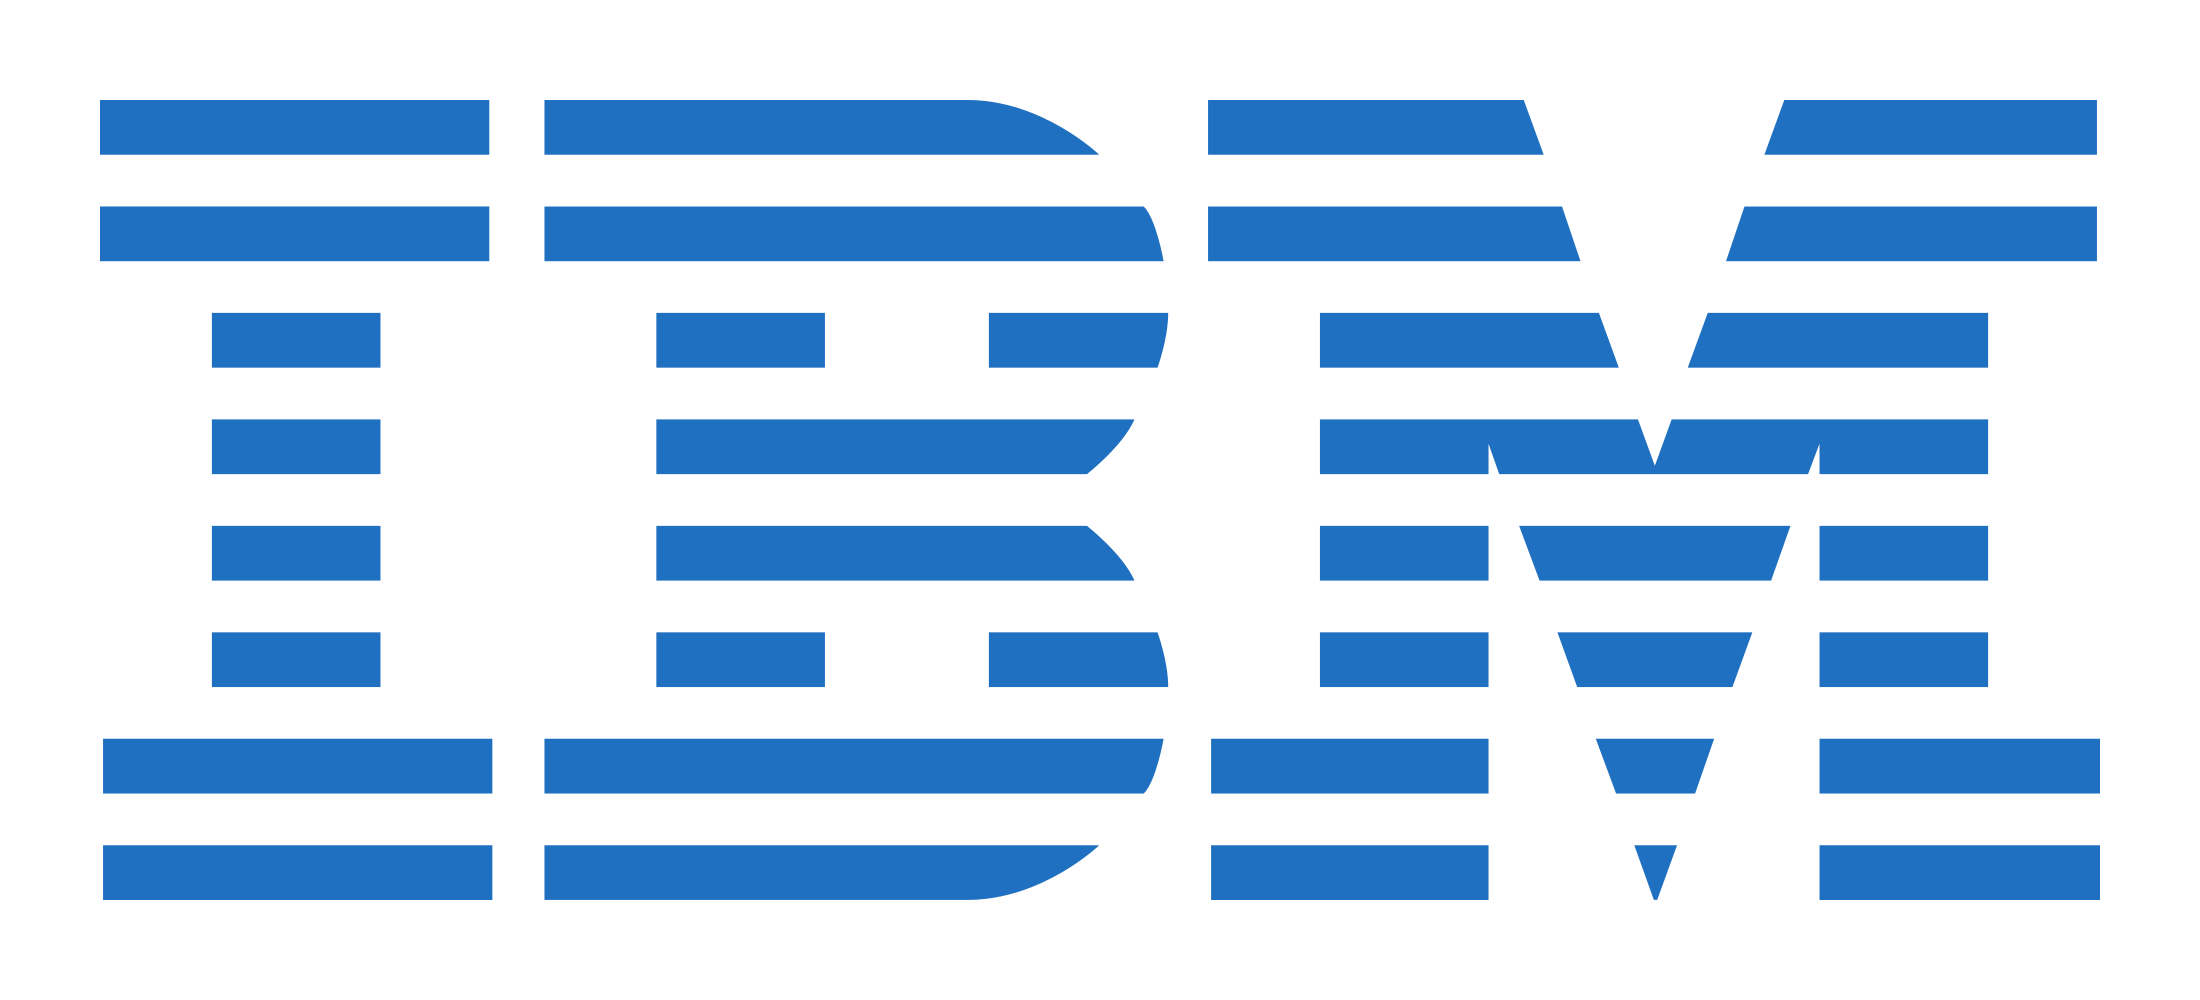 IBM partner